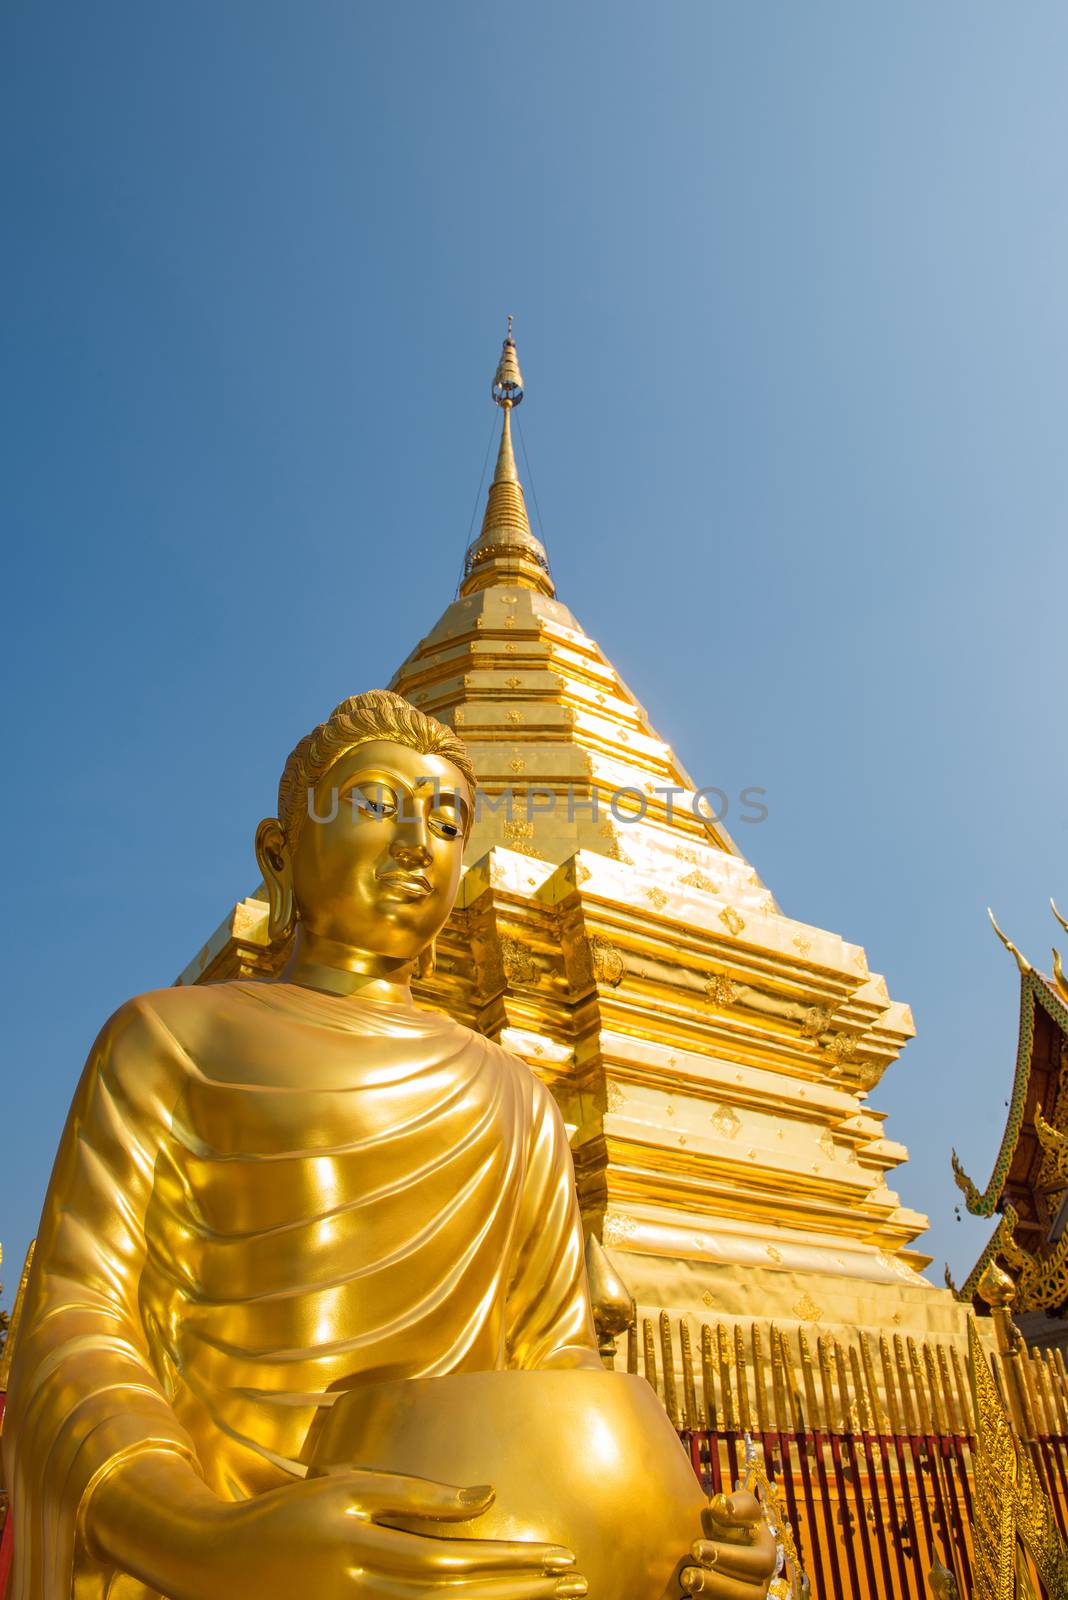 Buddha statue at Wat Phrathat Doi Suthep temple in Chiang Mai, Thailand.